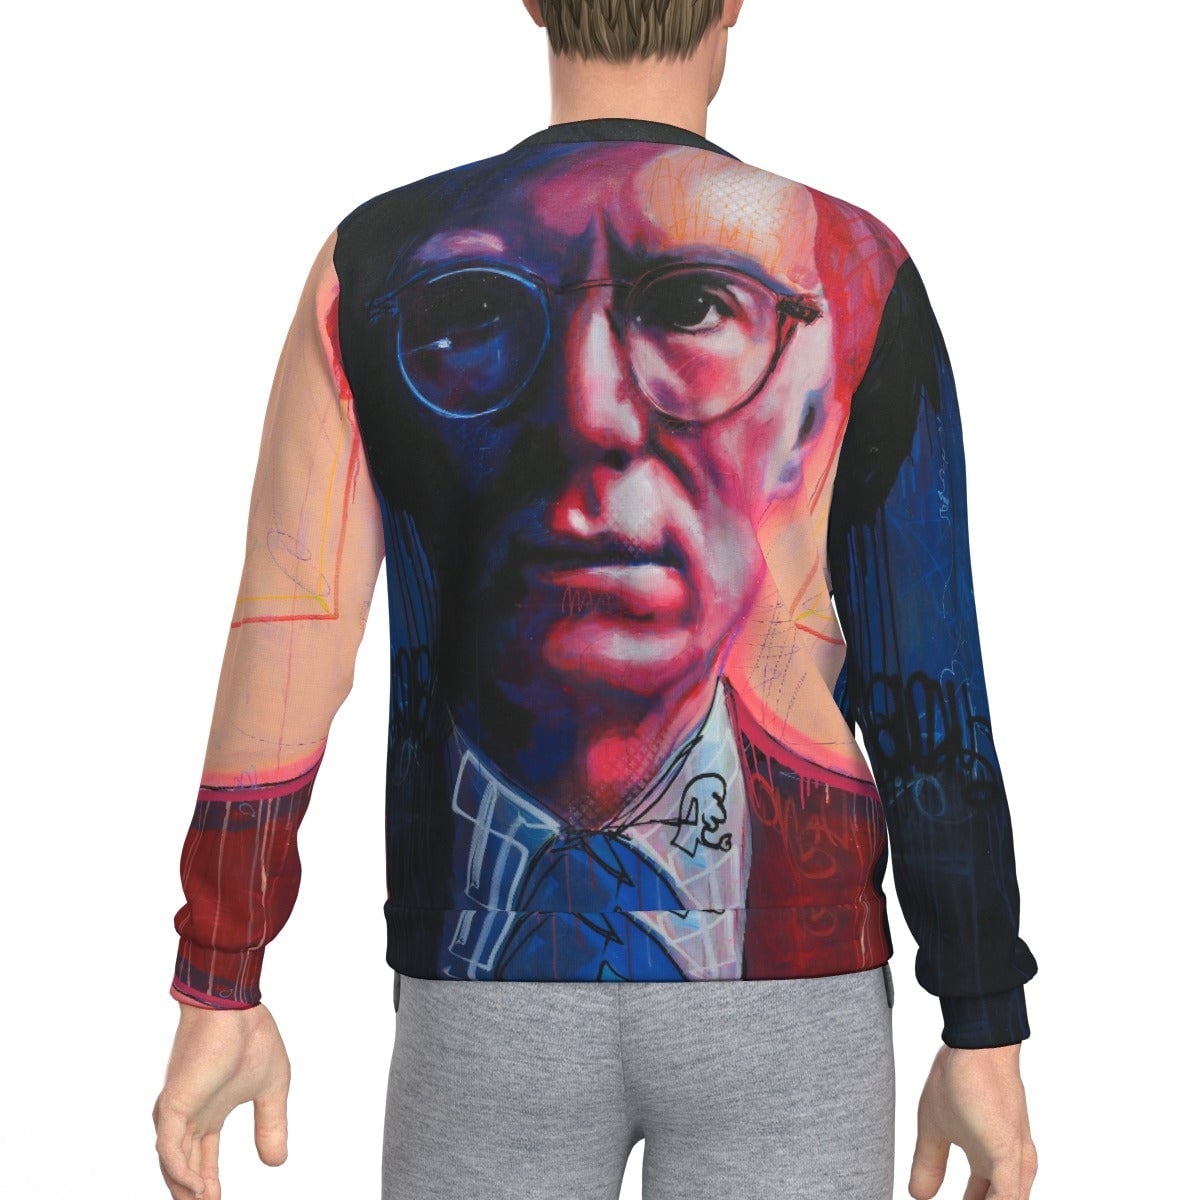 Andy Warhol Iconic Pop Art Surrealism Collage Sweatshirt